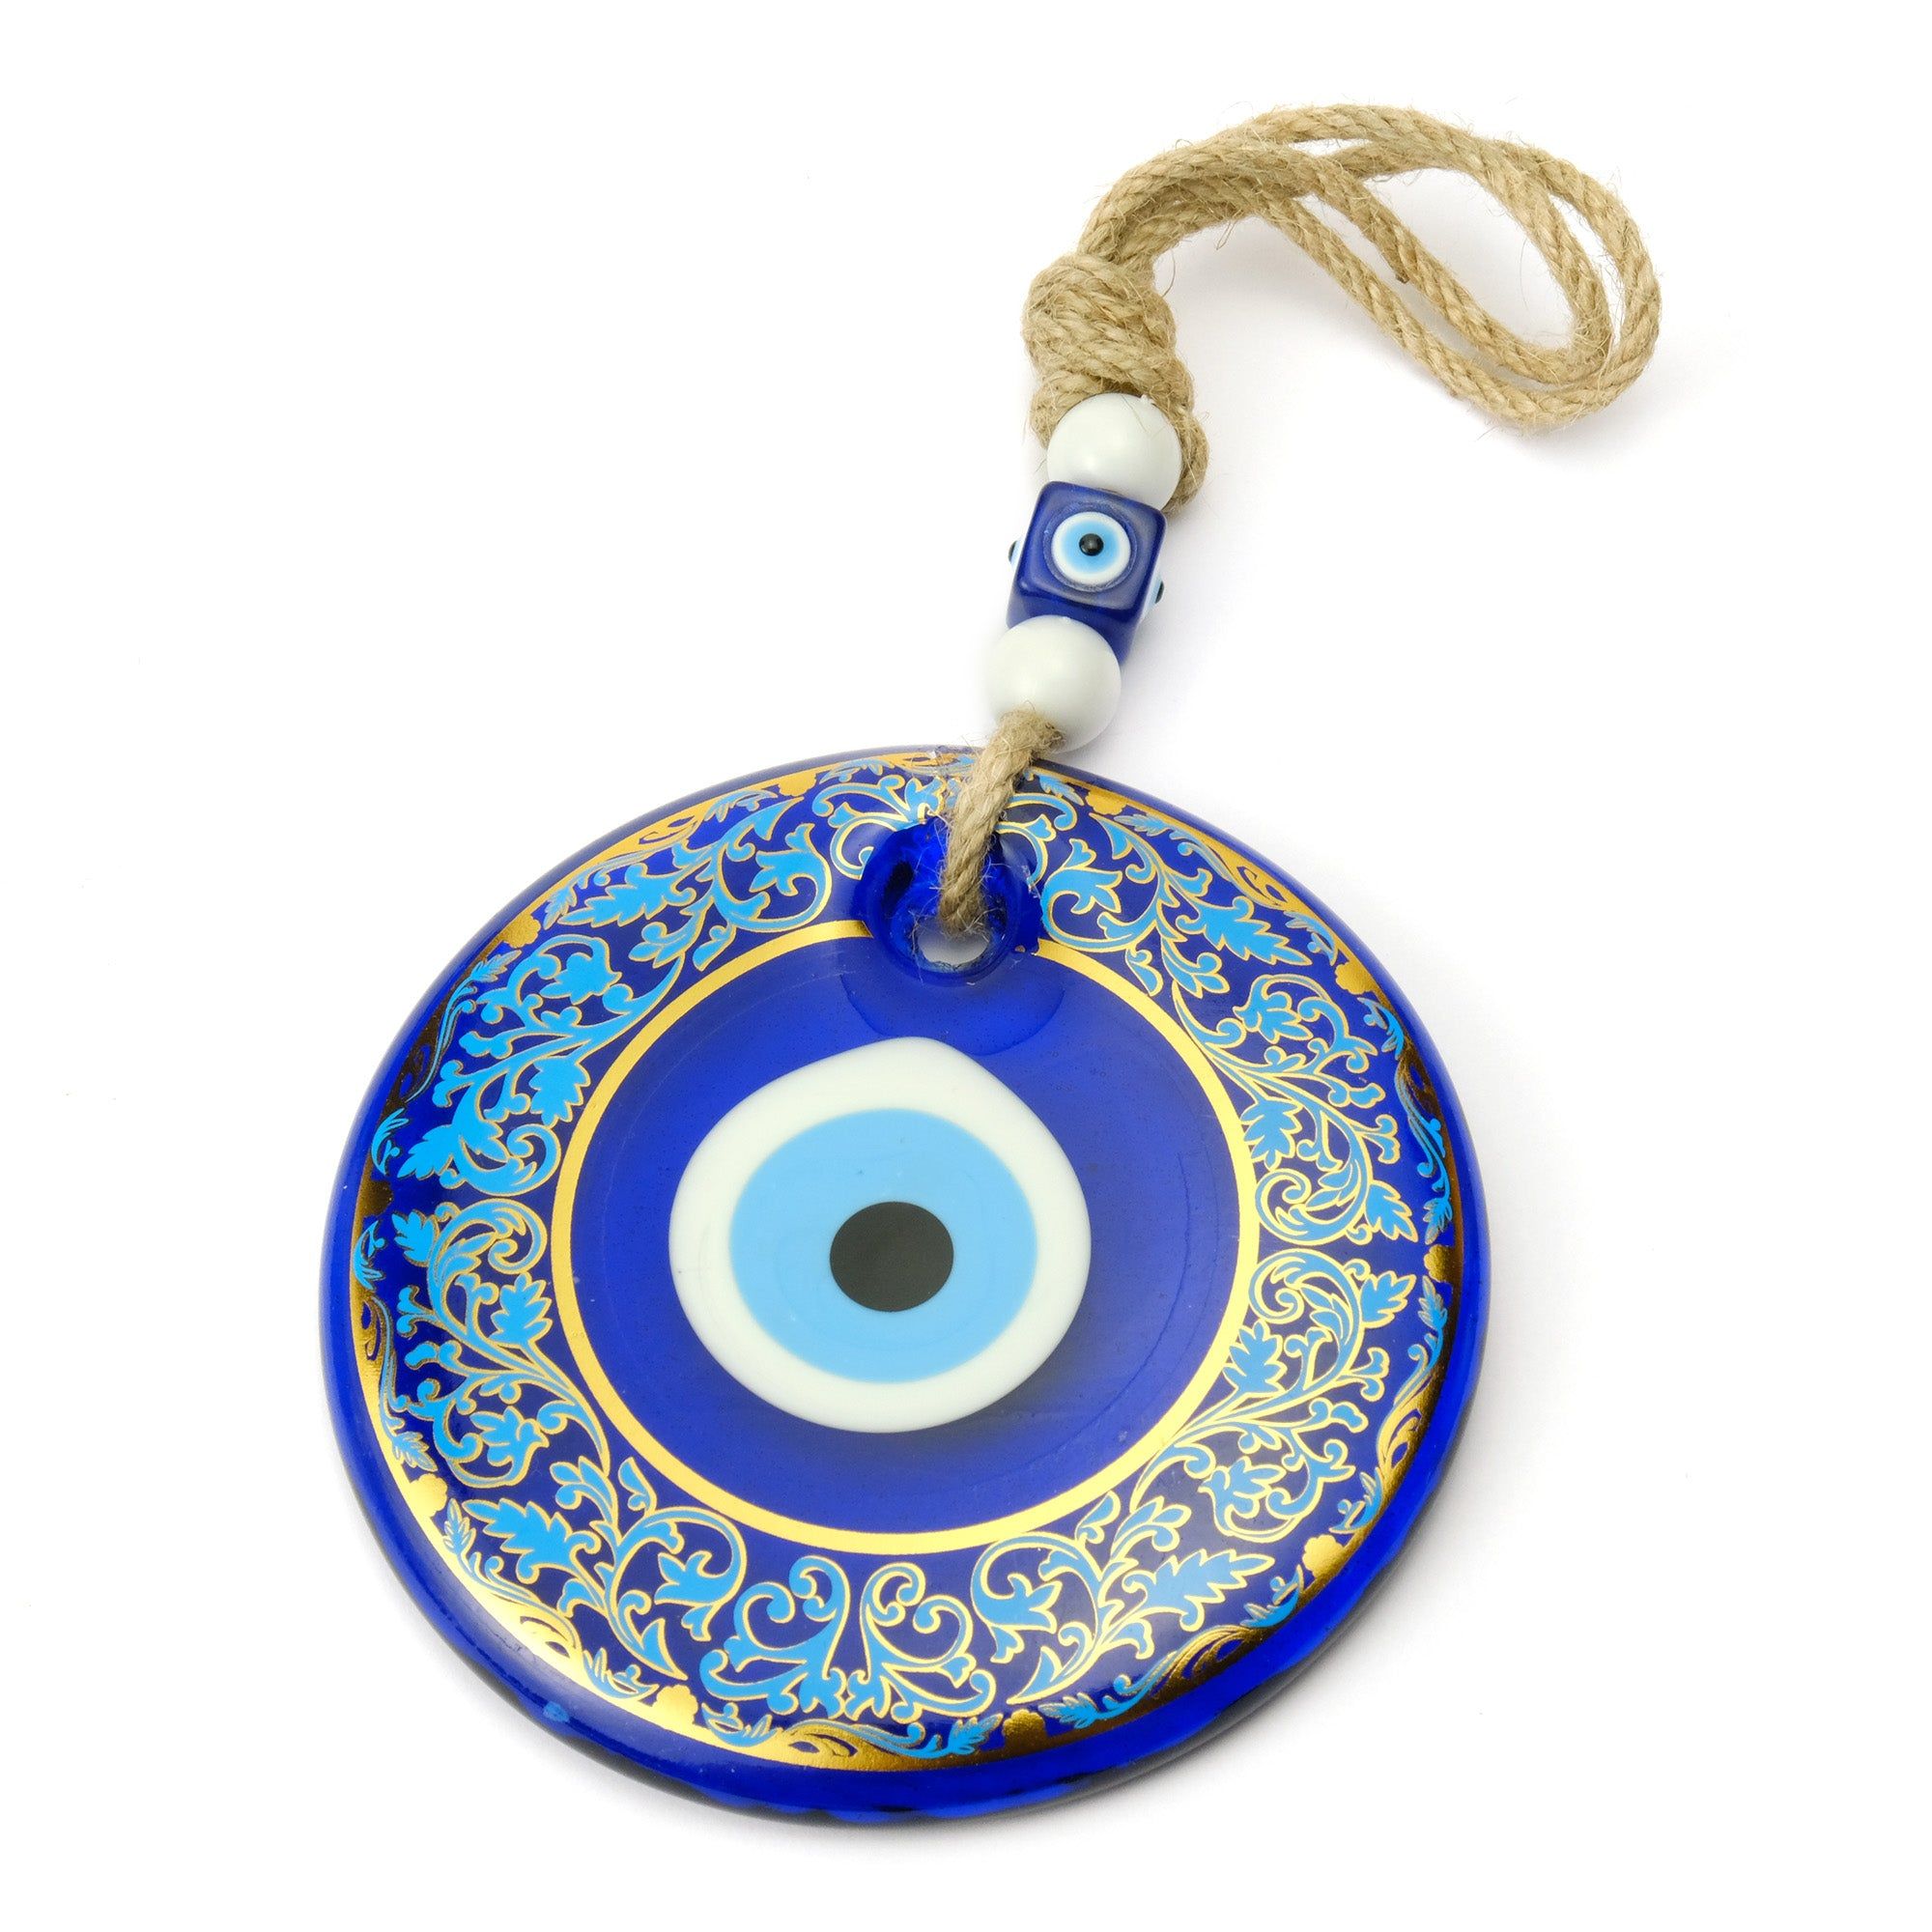 The turkish blue eye